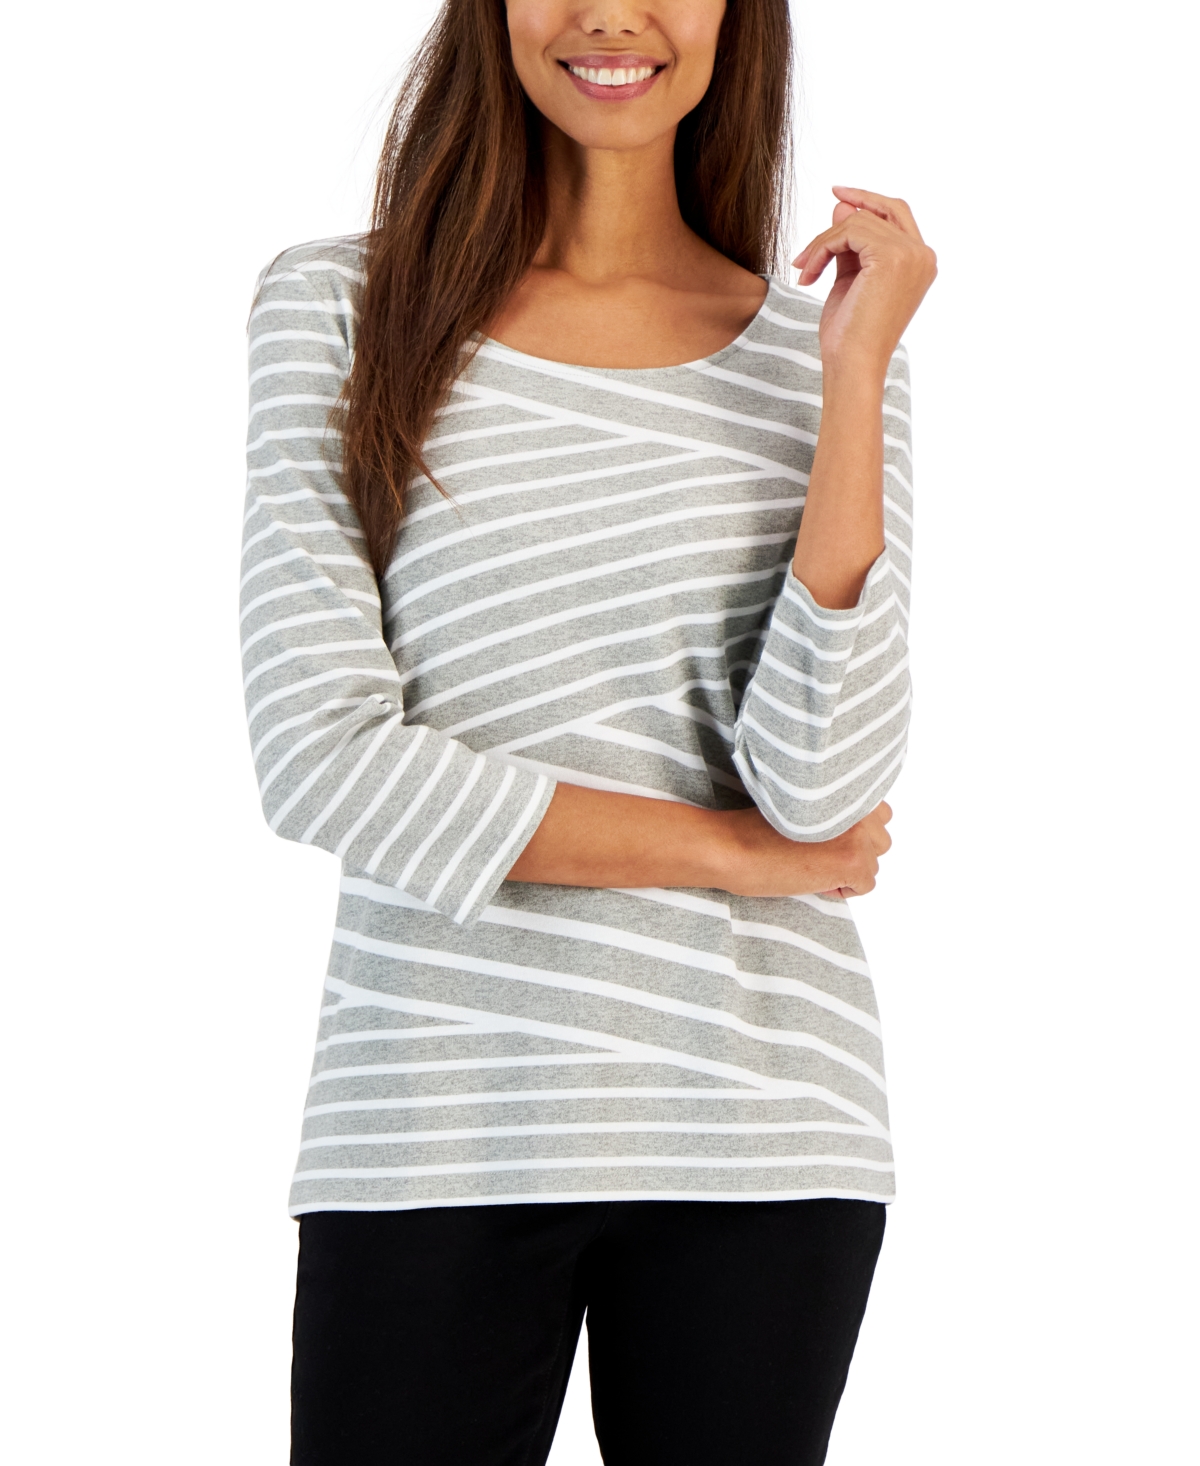 Women's Callie Asymmetrical-Stripe 3/4-Sleeve Top, Created for Macy's - Smoke Grey Heather